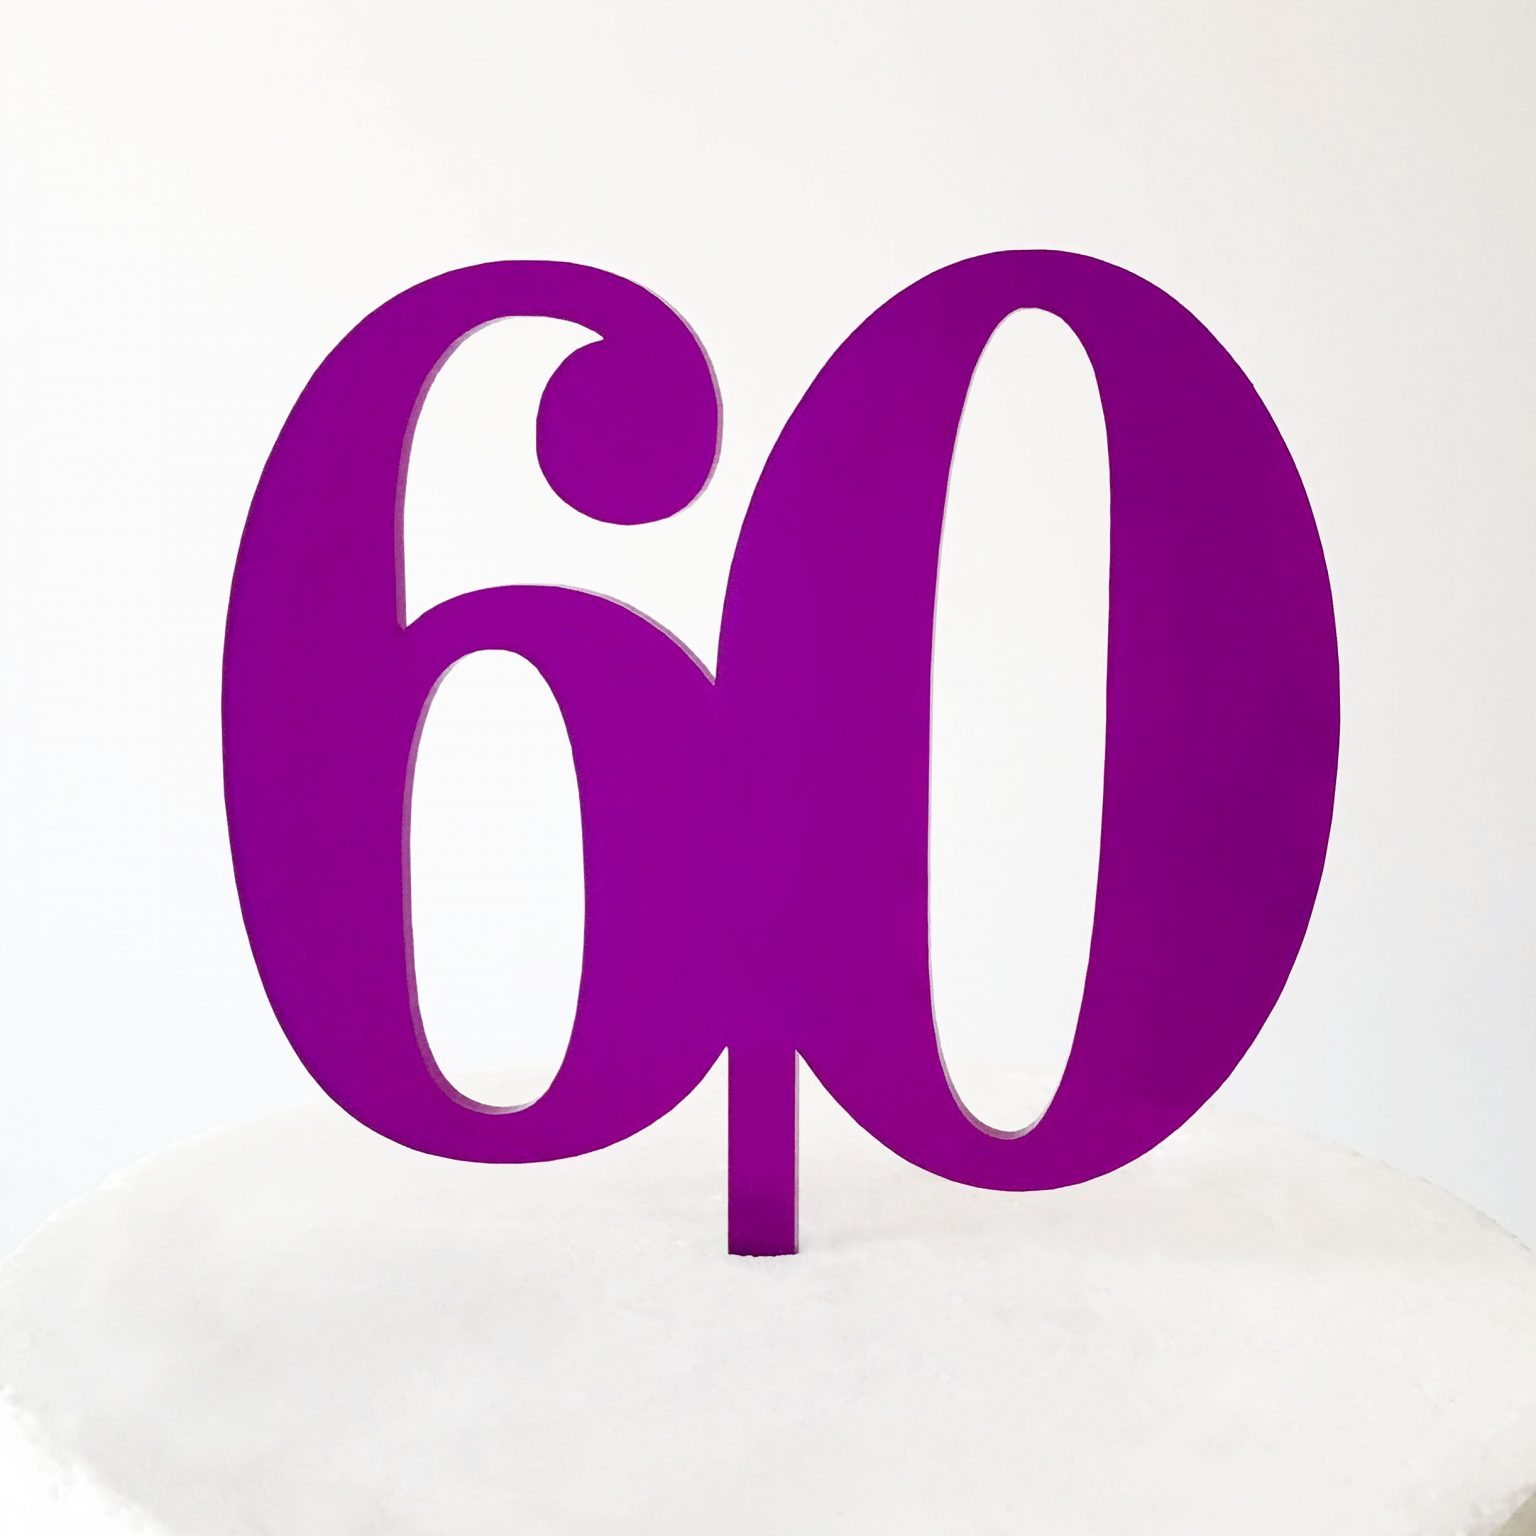 Classic Number 60 Cake Topper | SANDRA DILLON DESIGN
